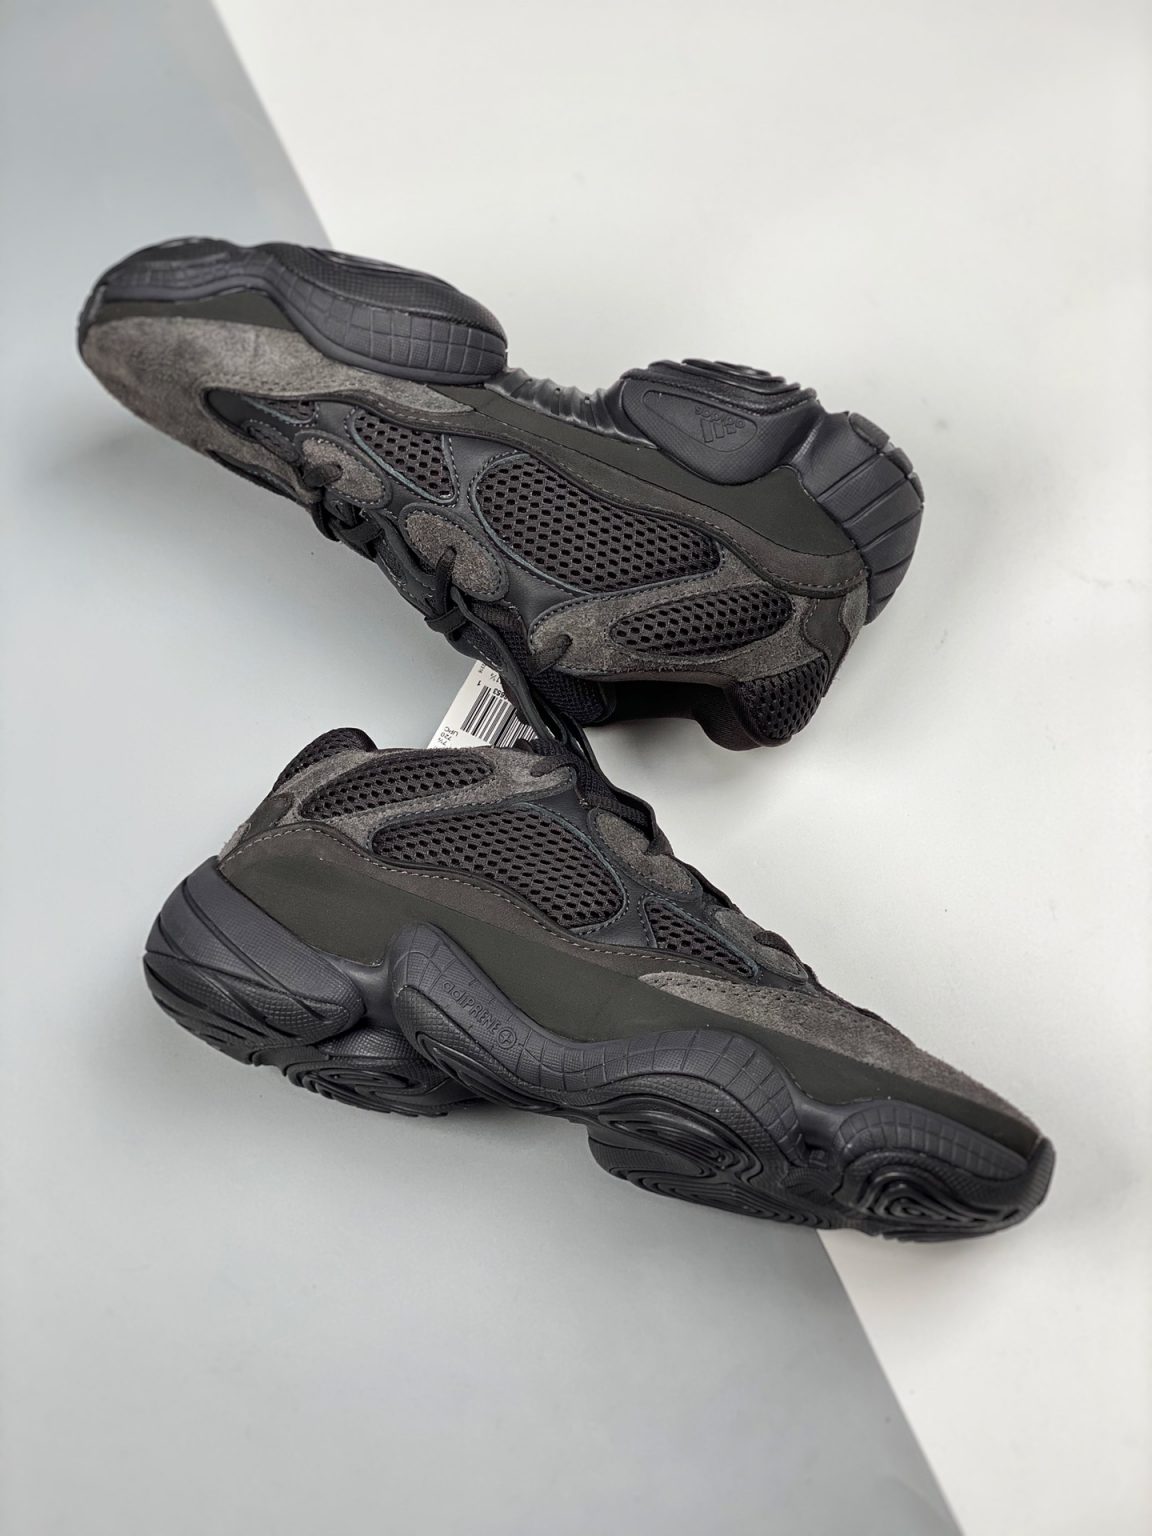 adidas Yeezy 500 “Utility Black” F36640 For Sale – Sneaker Hello